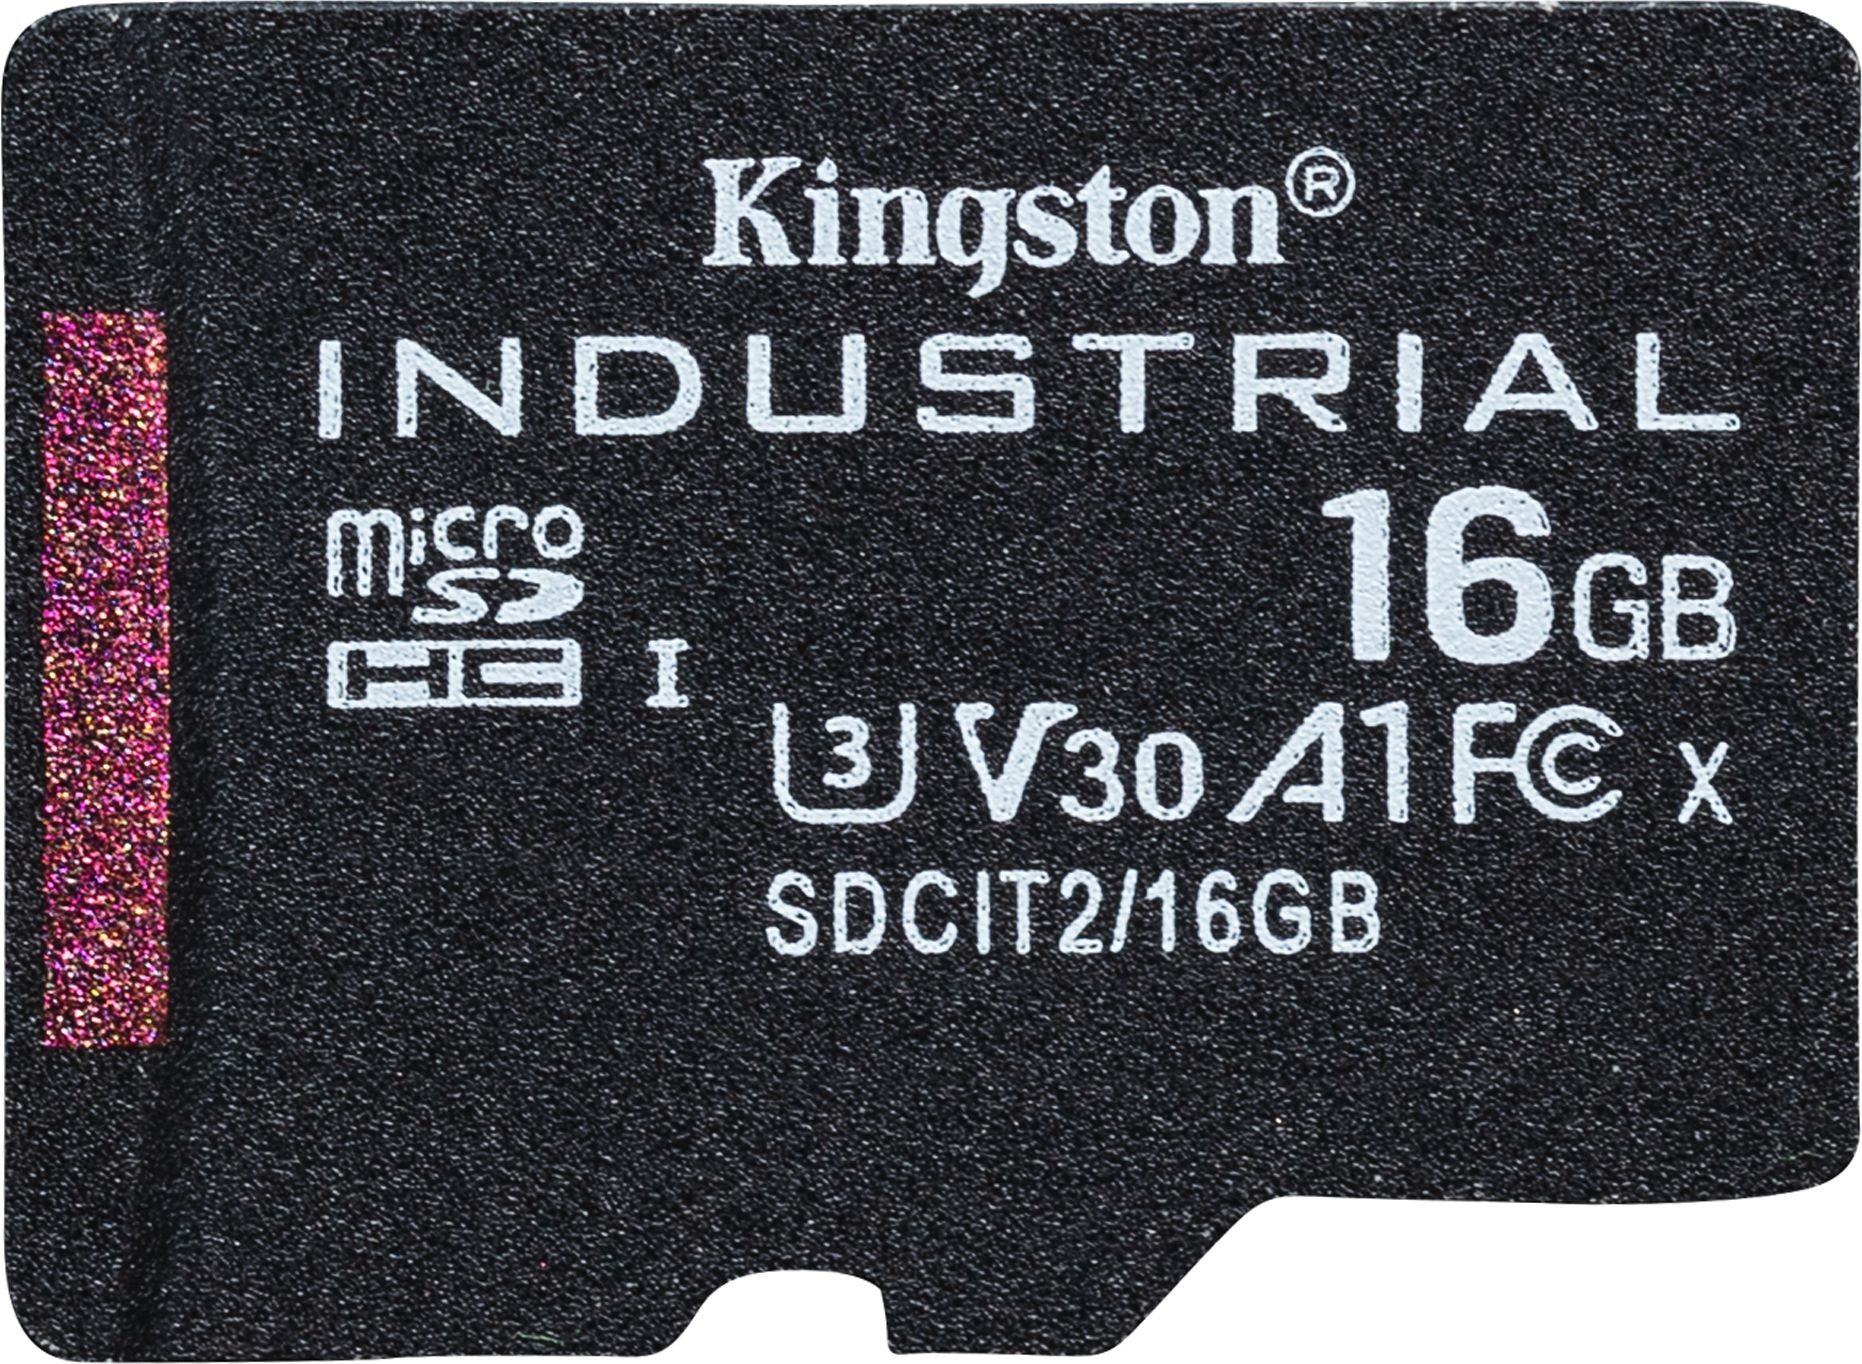 Kingston Industrial MicroSDHC 16GB UHS-I/U3 A1 V30 SDCIT2/16GB SDCIT2/16GB